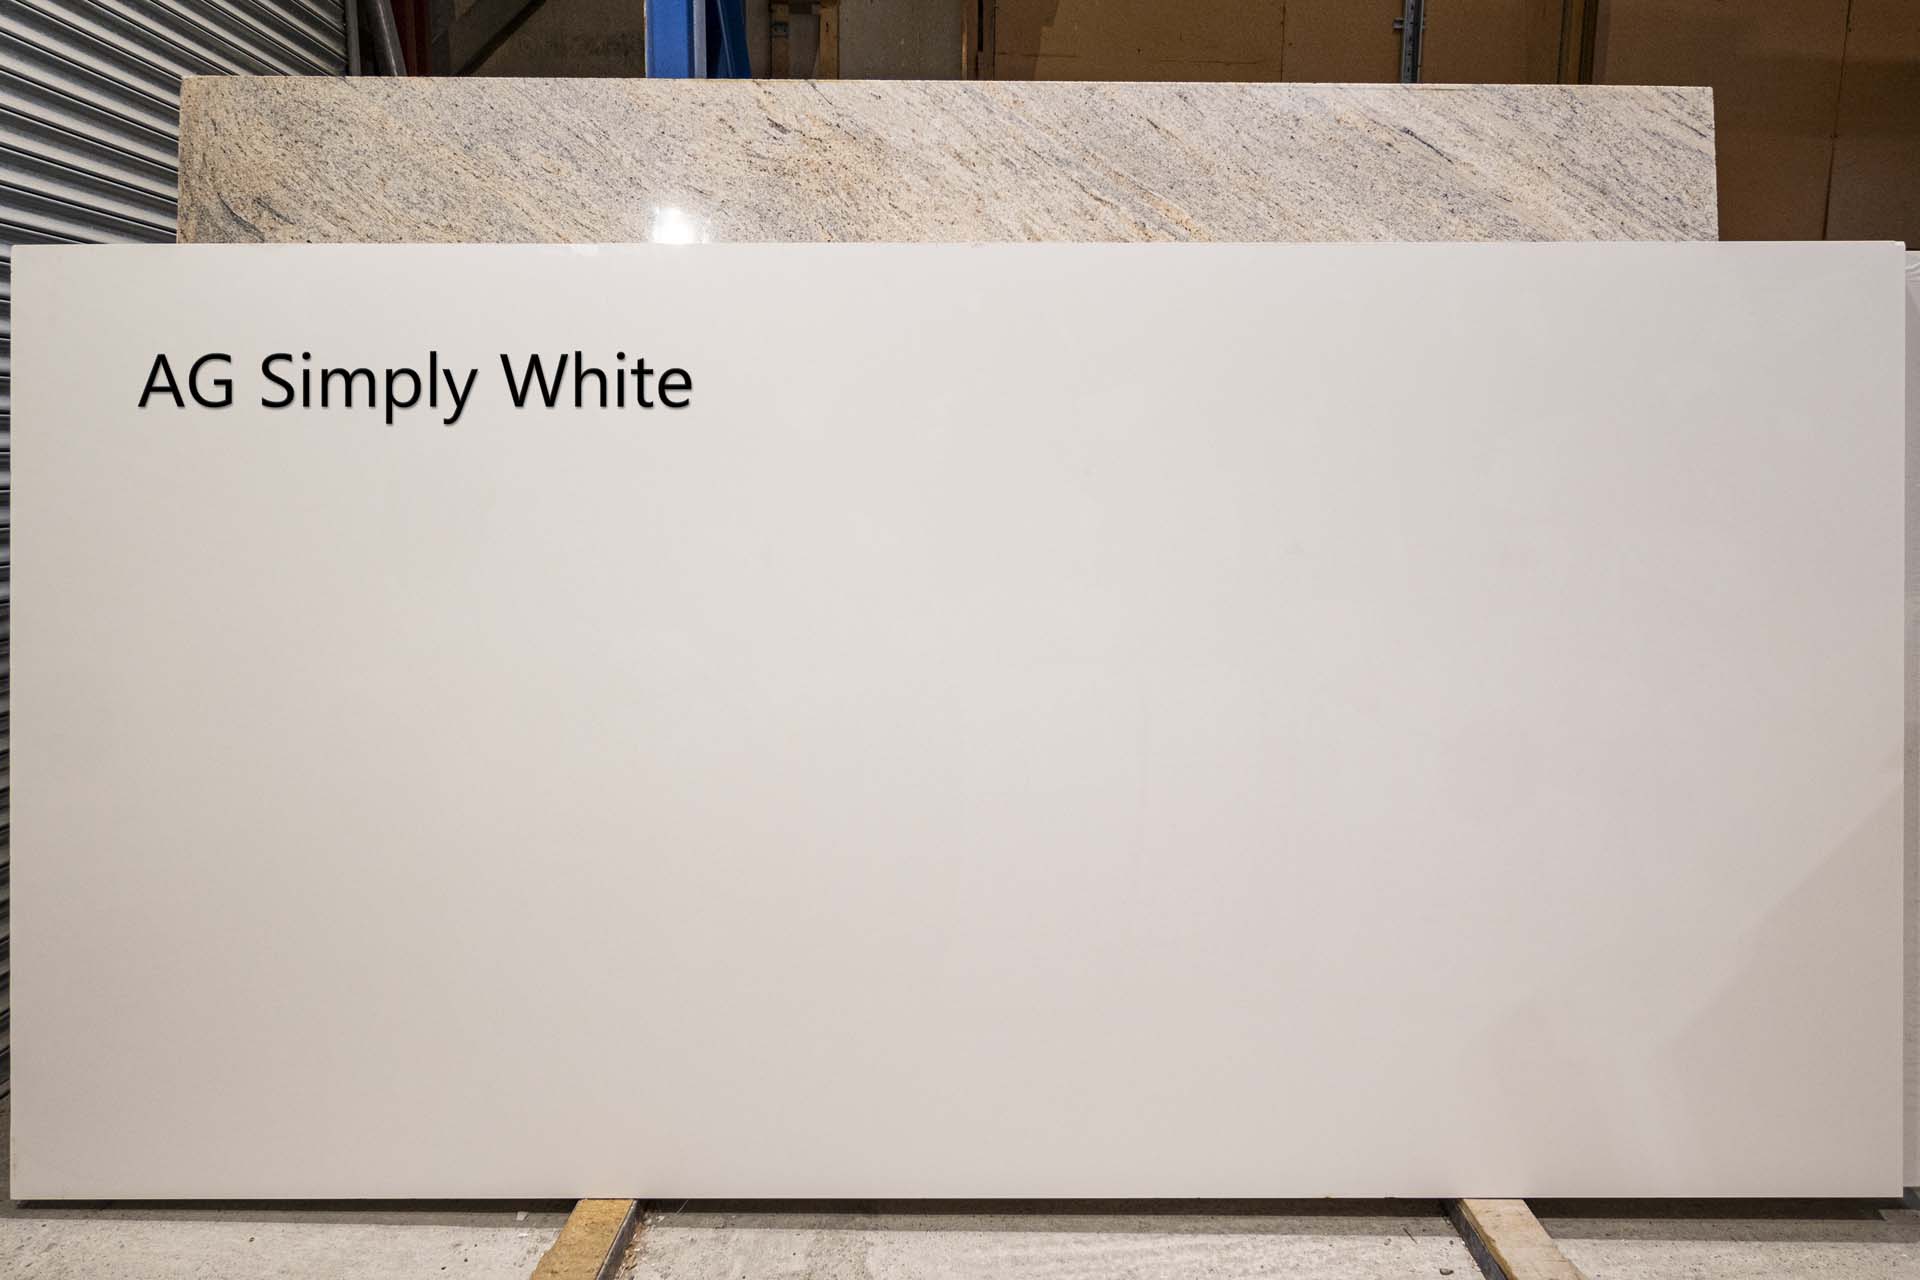 AG Simply White Quartz worktops SQ221017 43720 143759 slab view caption